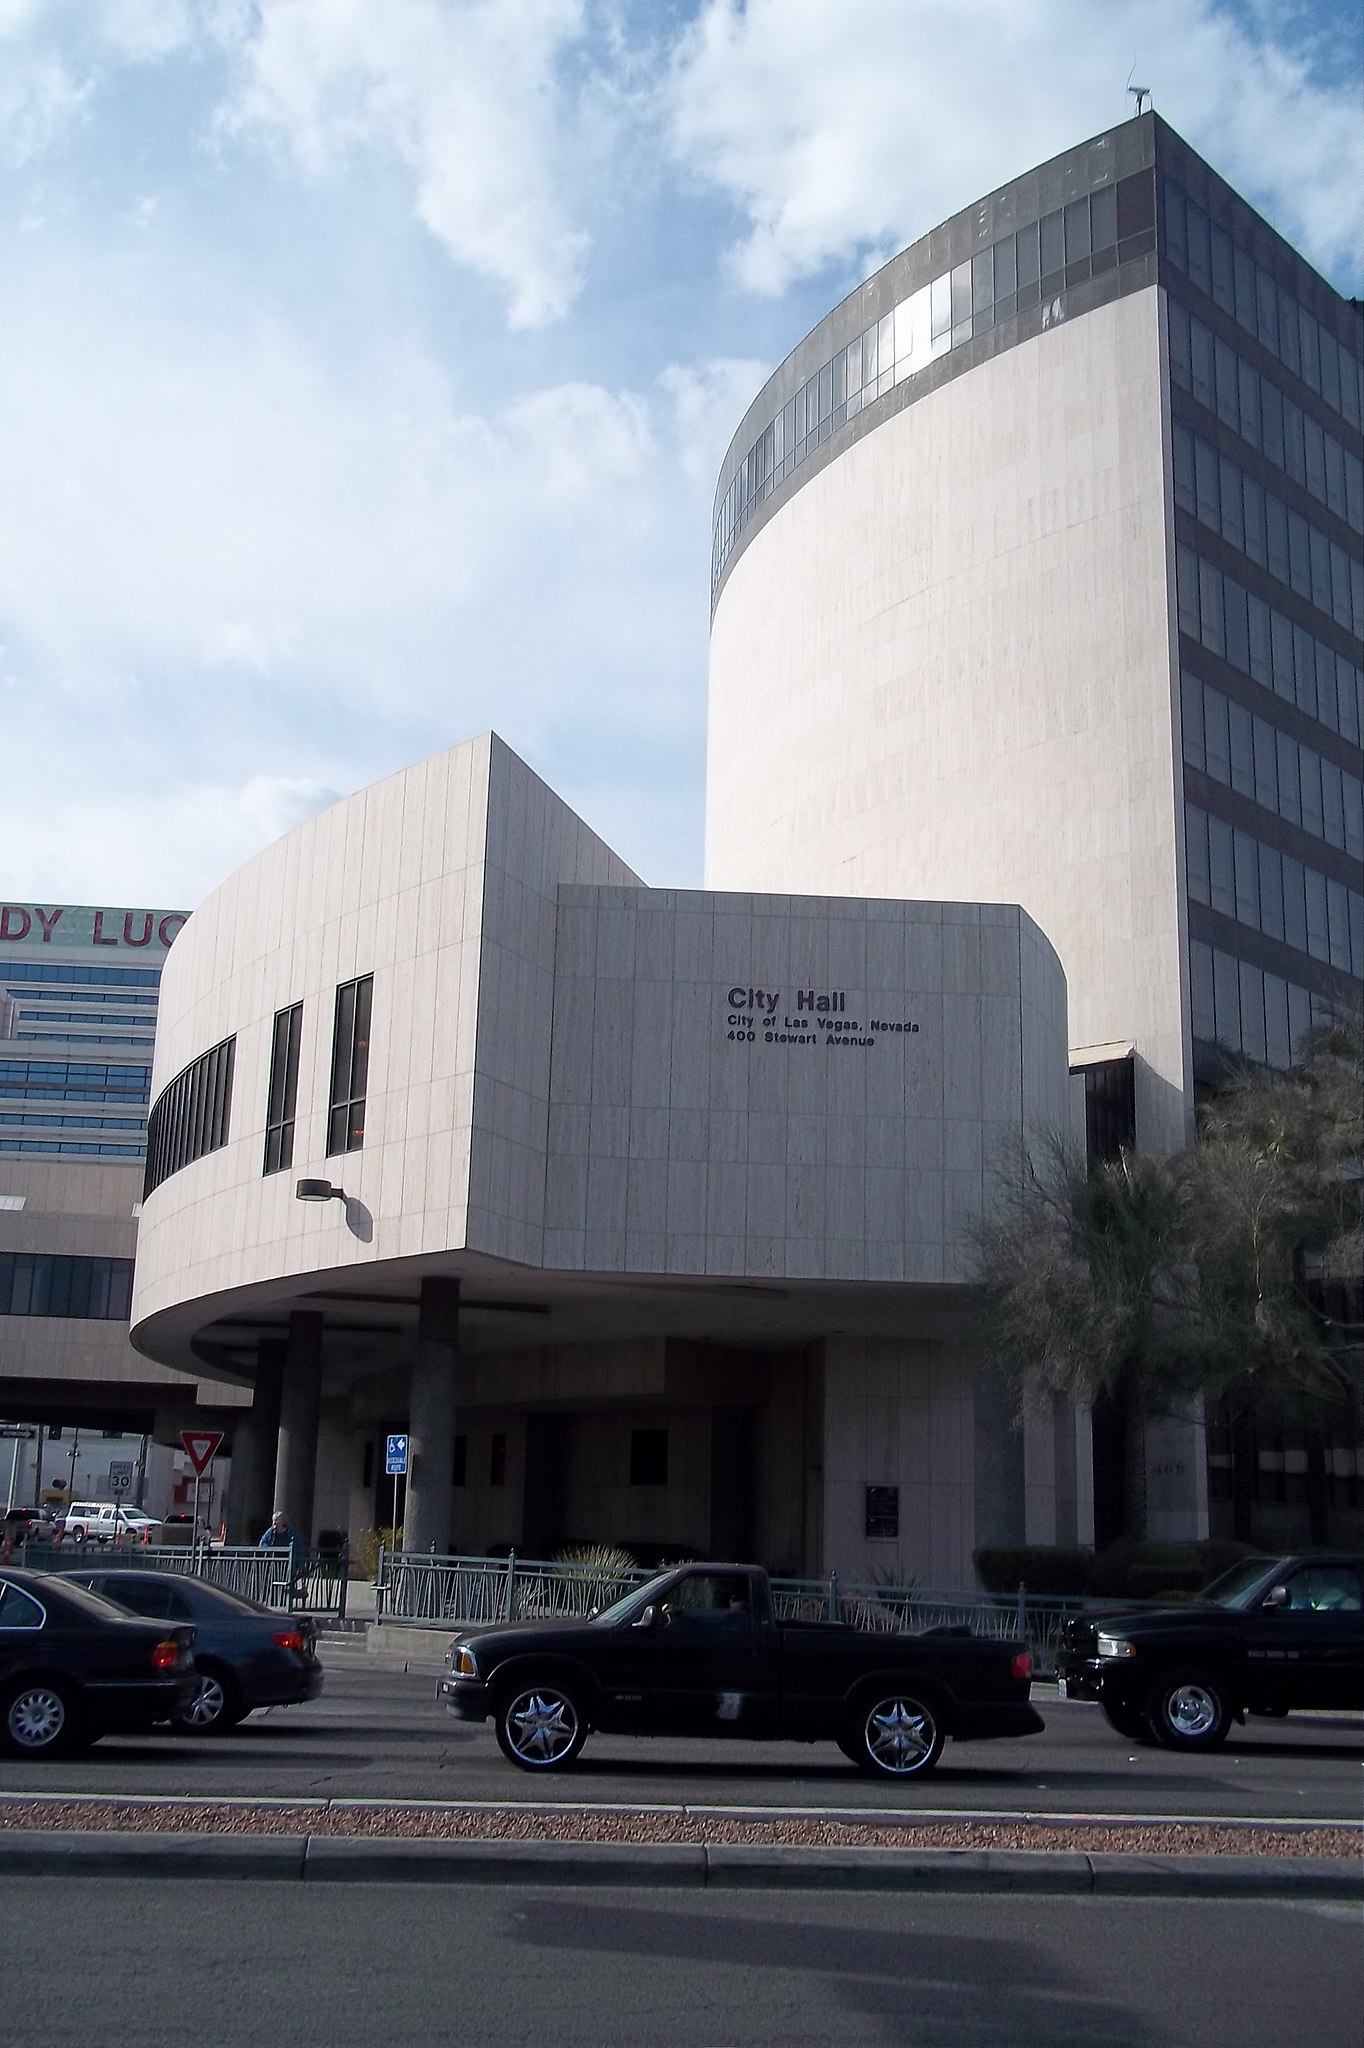 File:Las vegas city hall.jpg - Wikimedia Commons